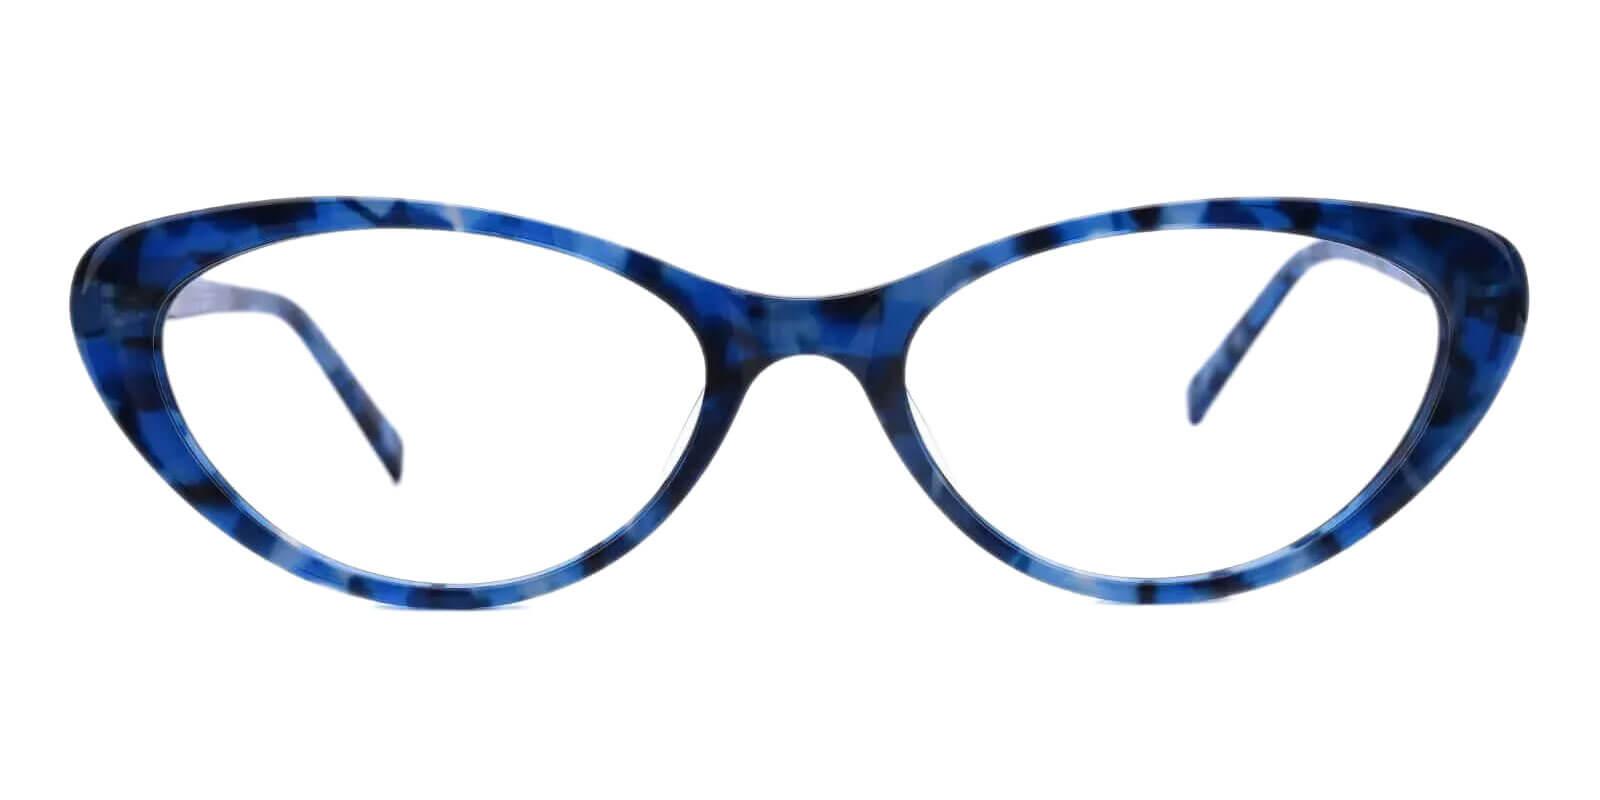 Elena Blue Acetate Eyeglasses , UniversalBridgeFit Frames from ABBE Glasses